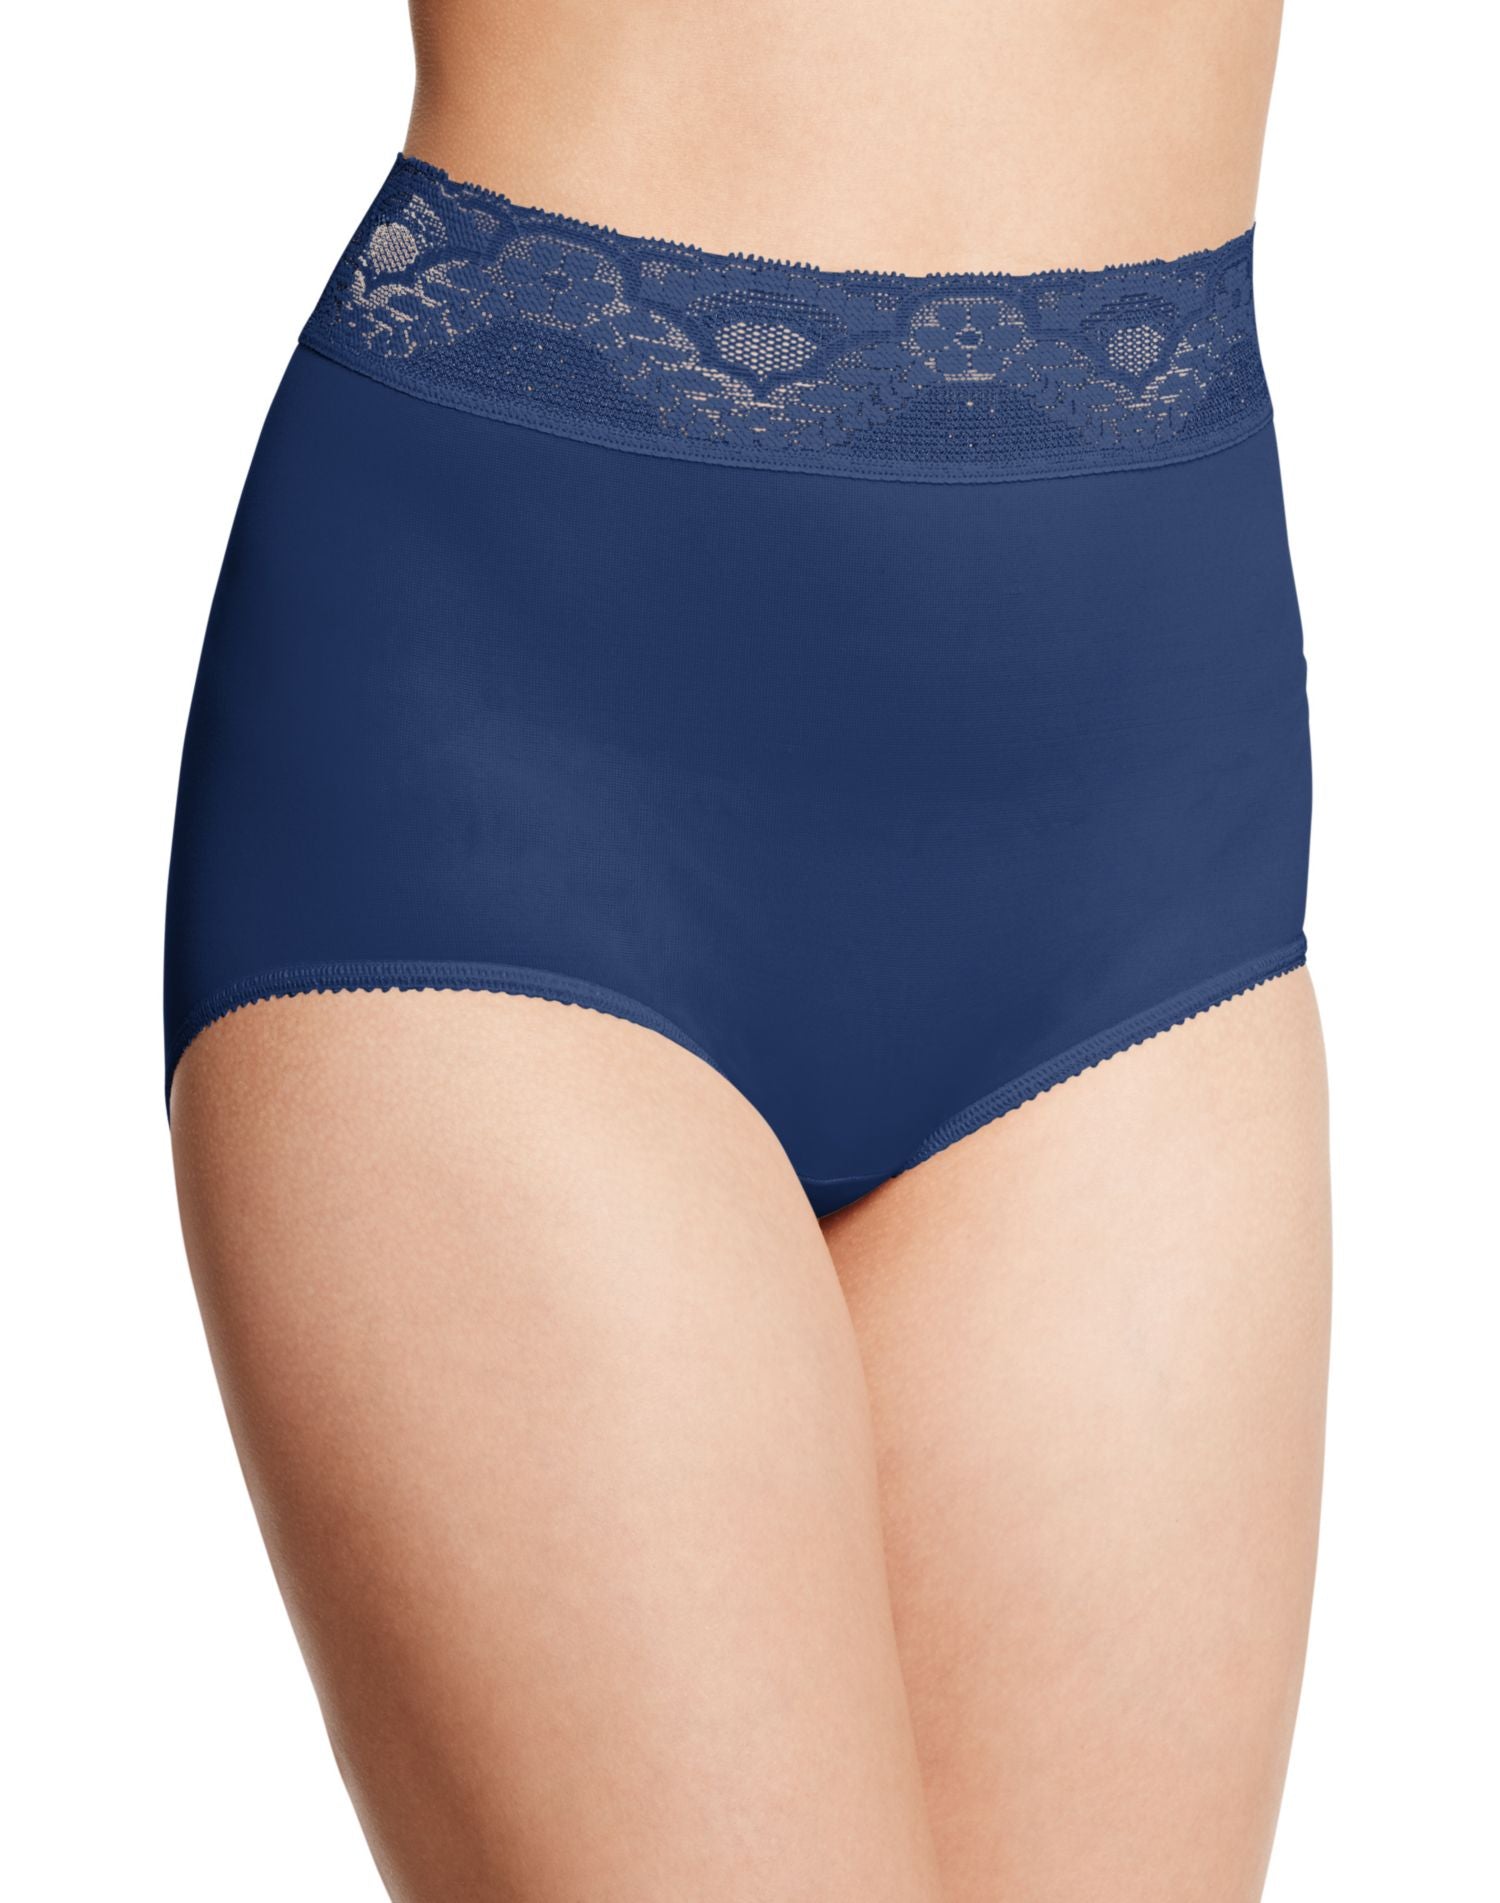 BALI Lacy Skamp Panties Style 2744 Brief Nylon Spandex Cotton Liner Sizes 5  - 6